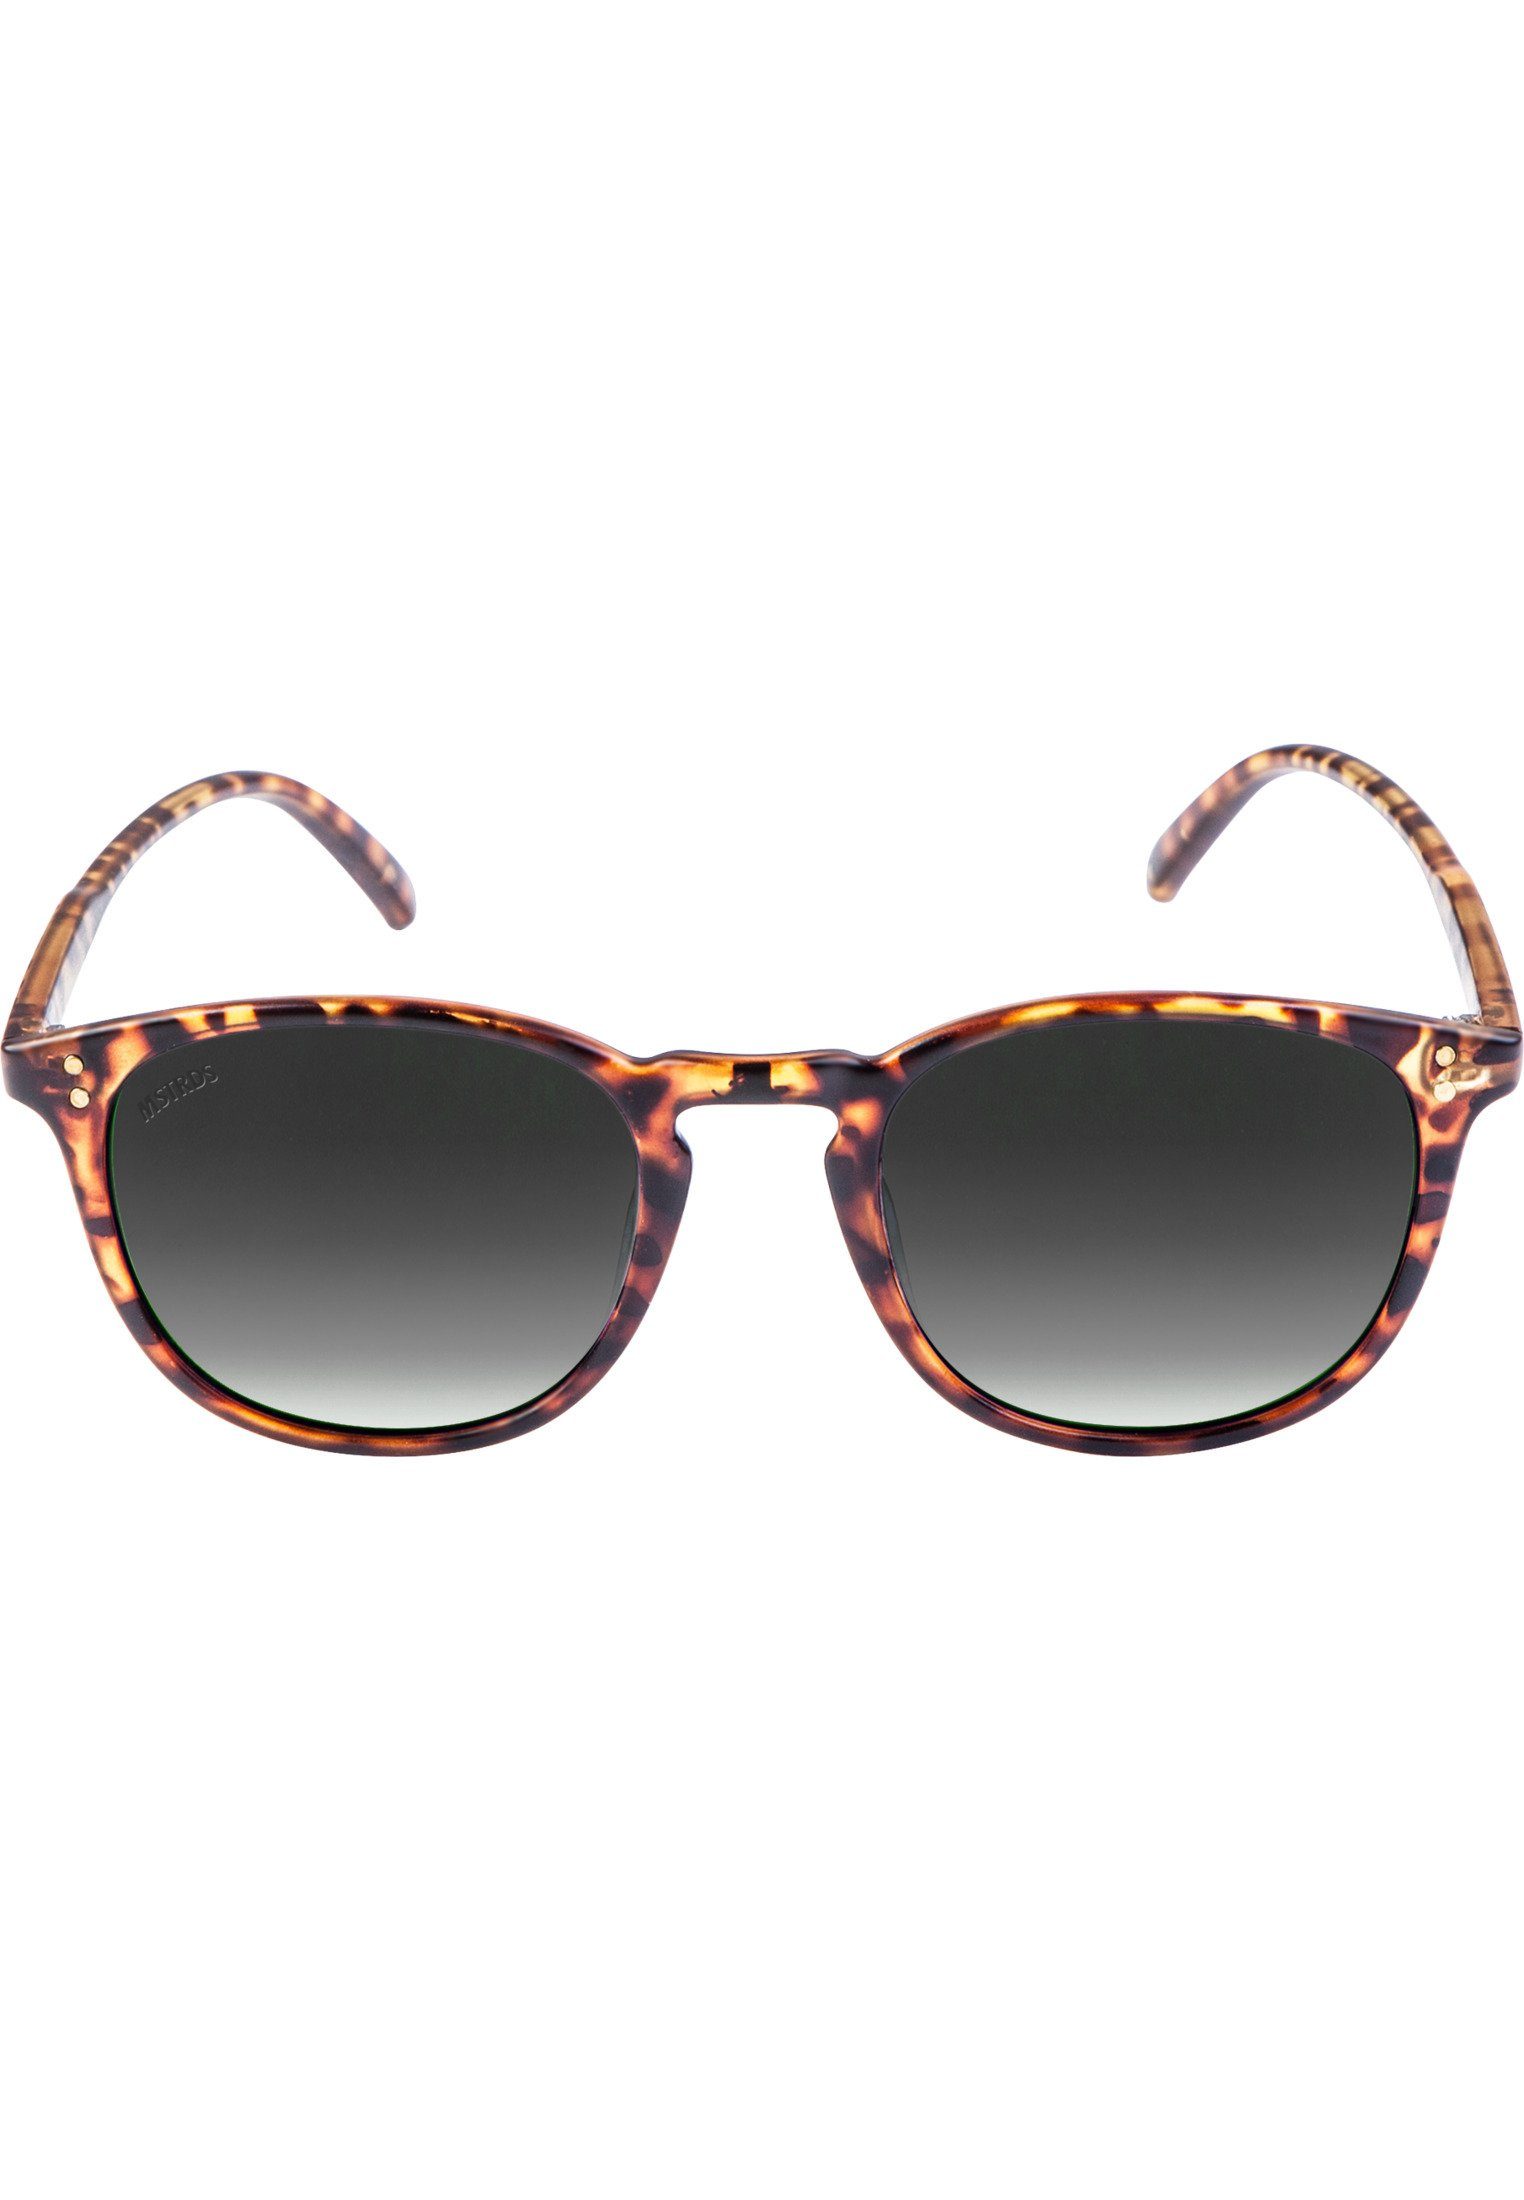 MSTRDS Sonnenbrille Accessoires Sunglasses Arthur Youth havanna/grey